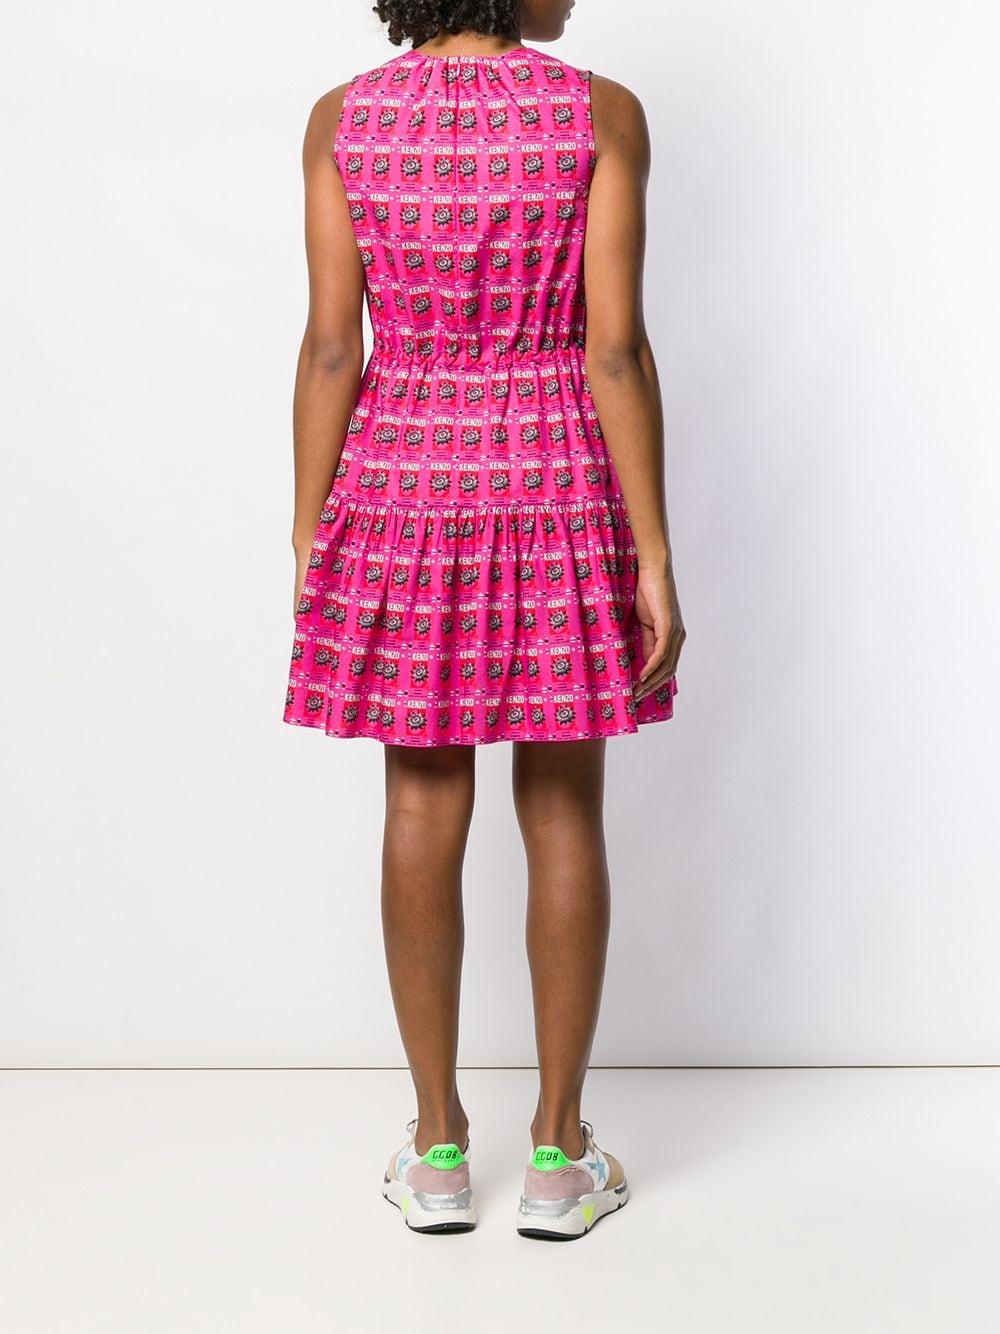 KENZO Cotton Logo Print Sleeveless Dress in Pink - Lyst